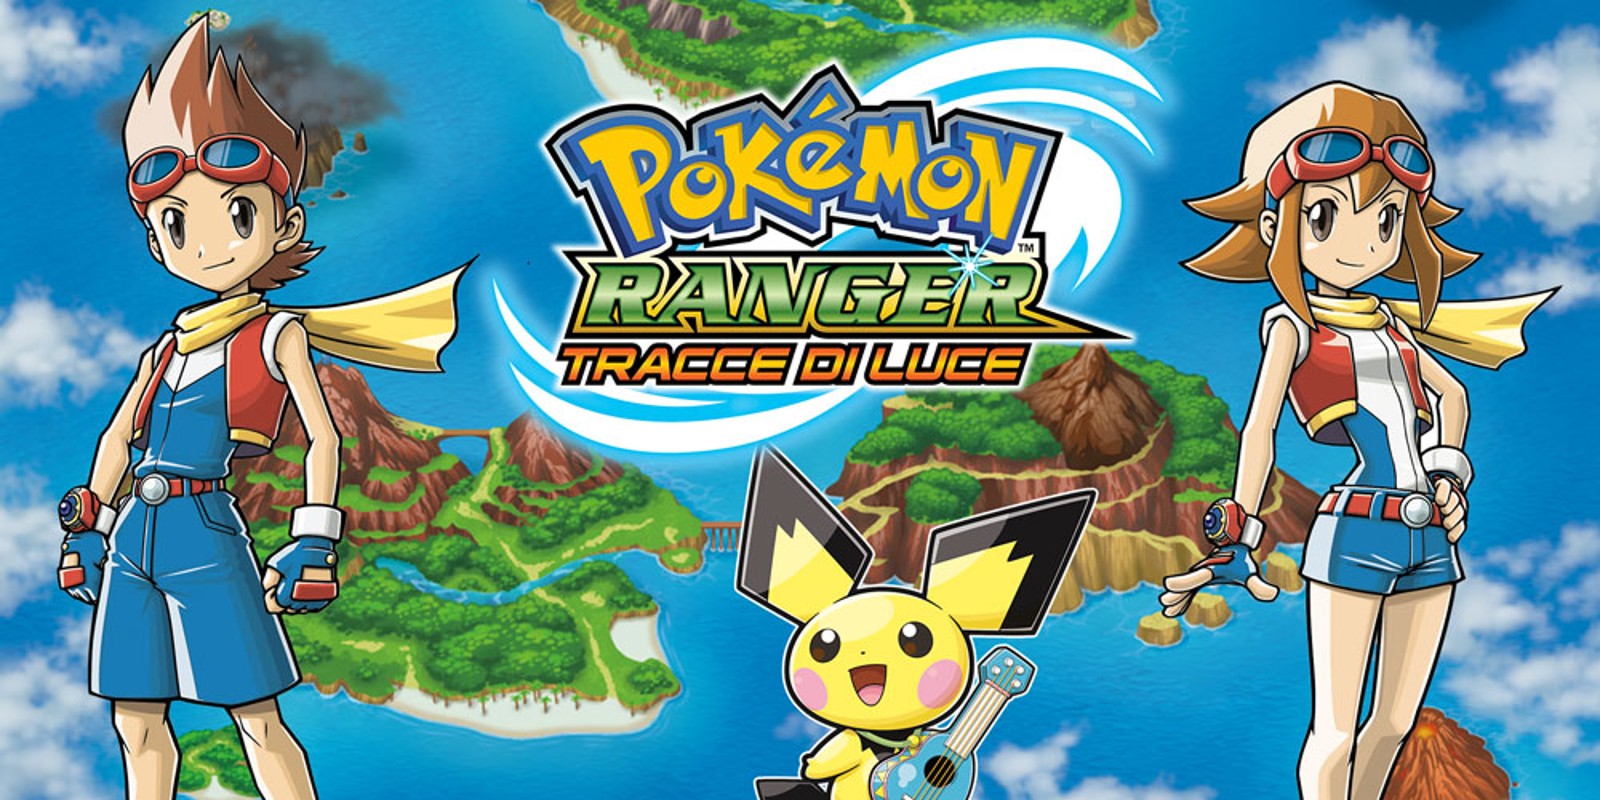 Pokémon Ranger: Tracce di Luce